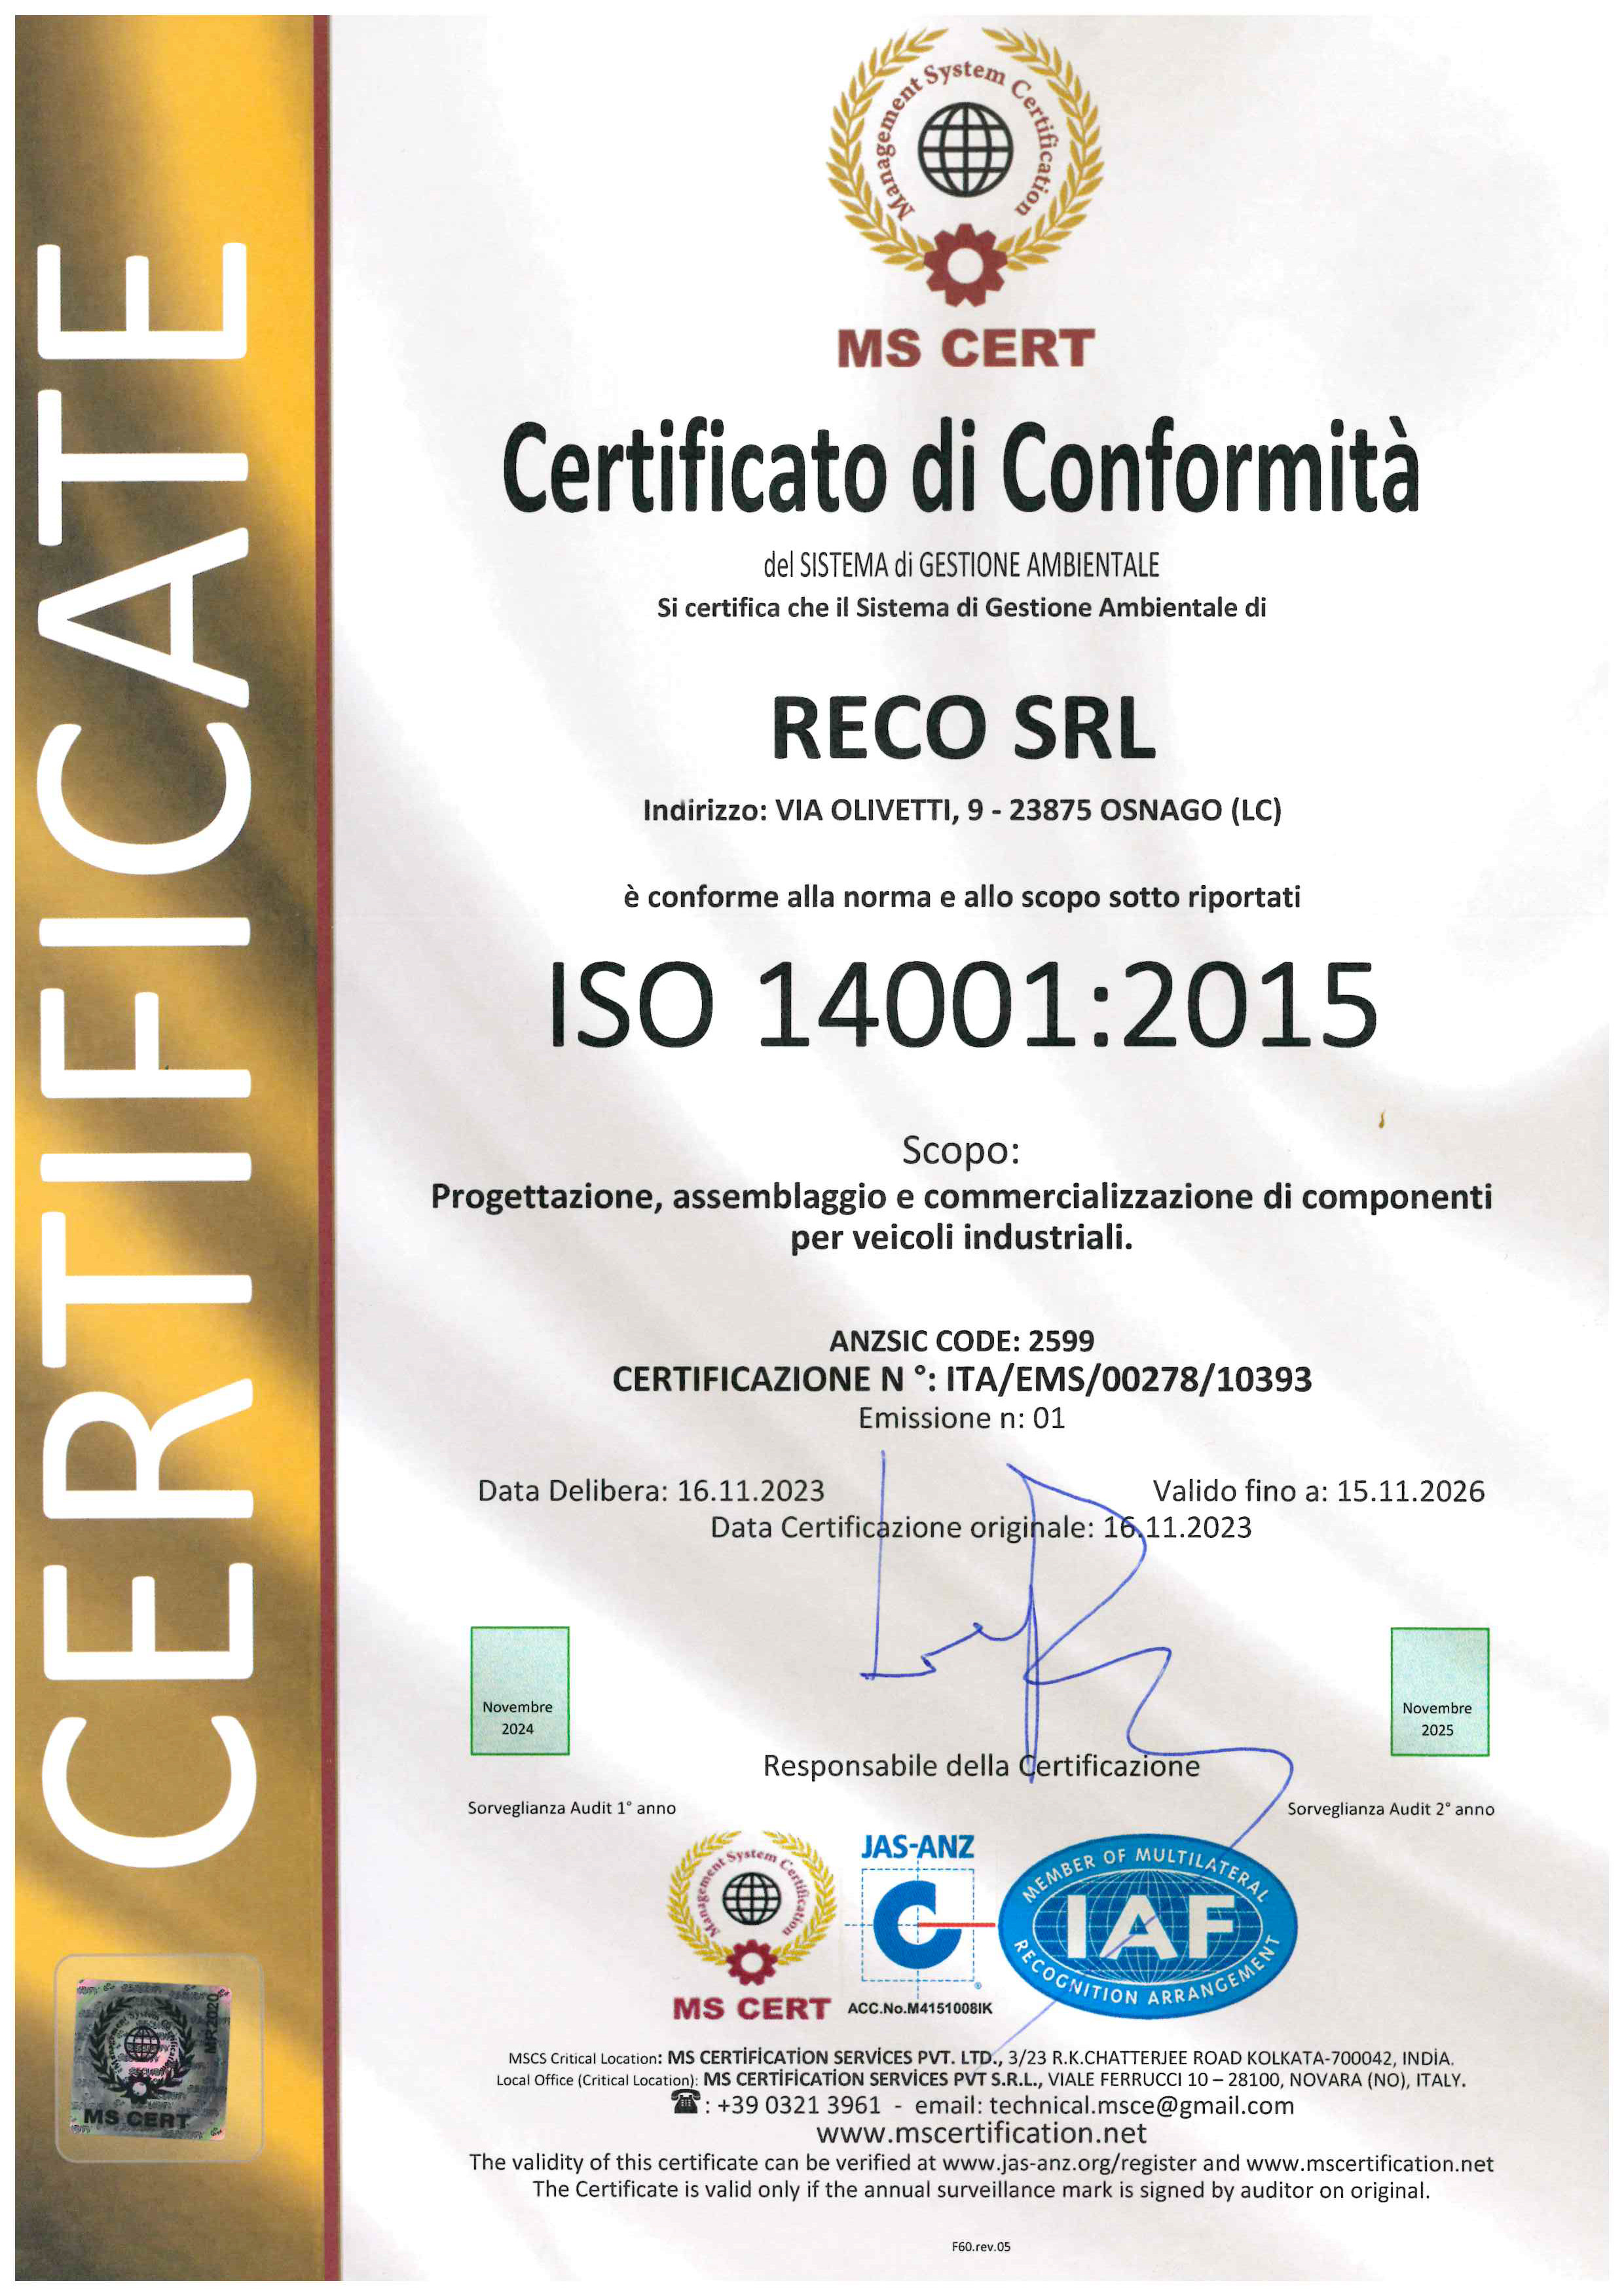 Environmental certification ISO 14001